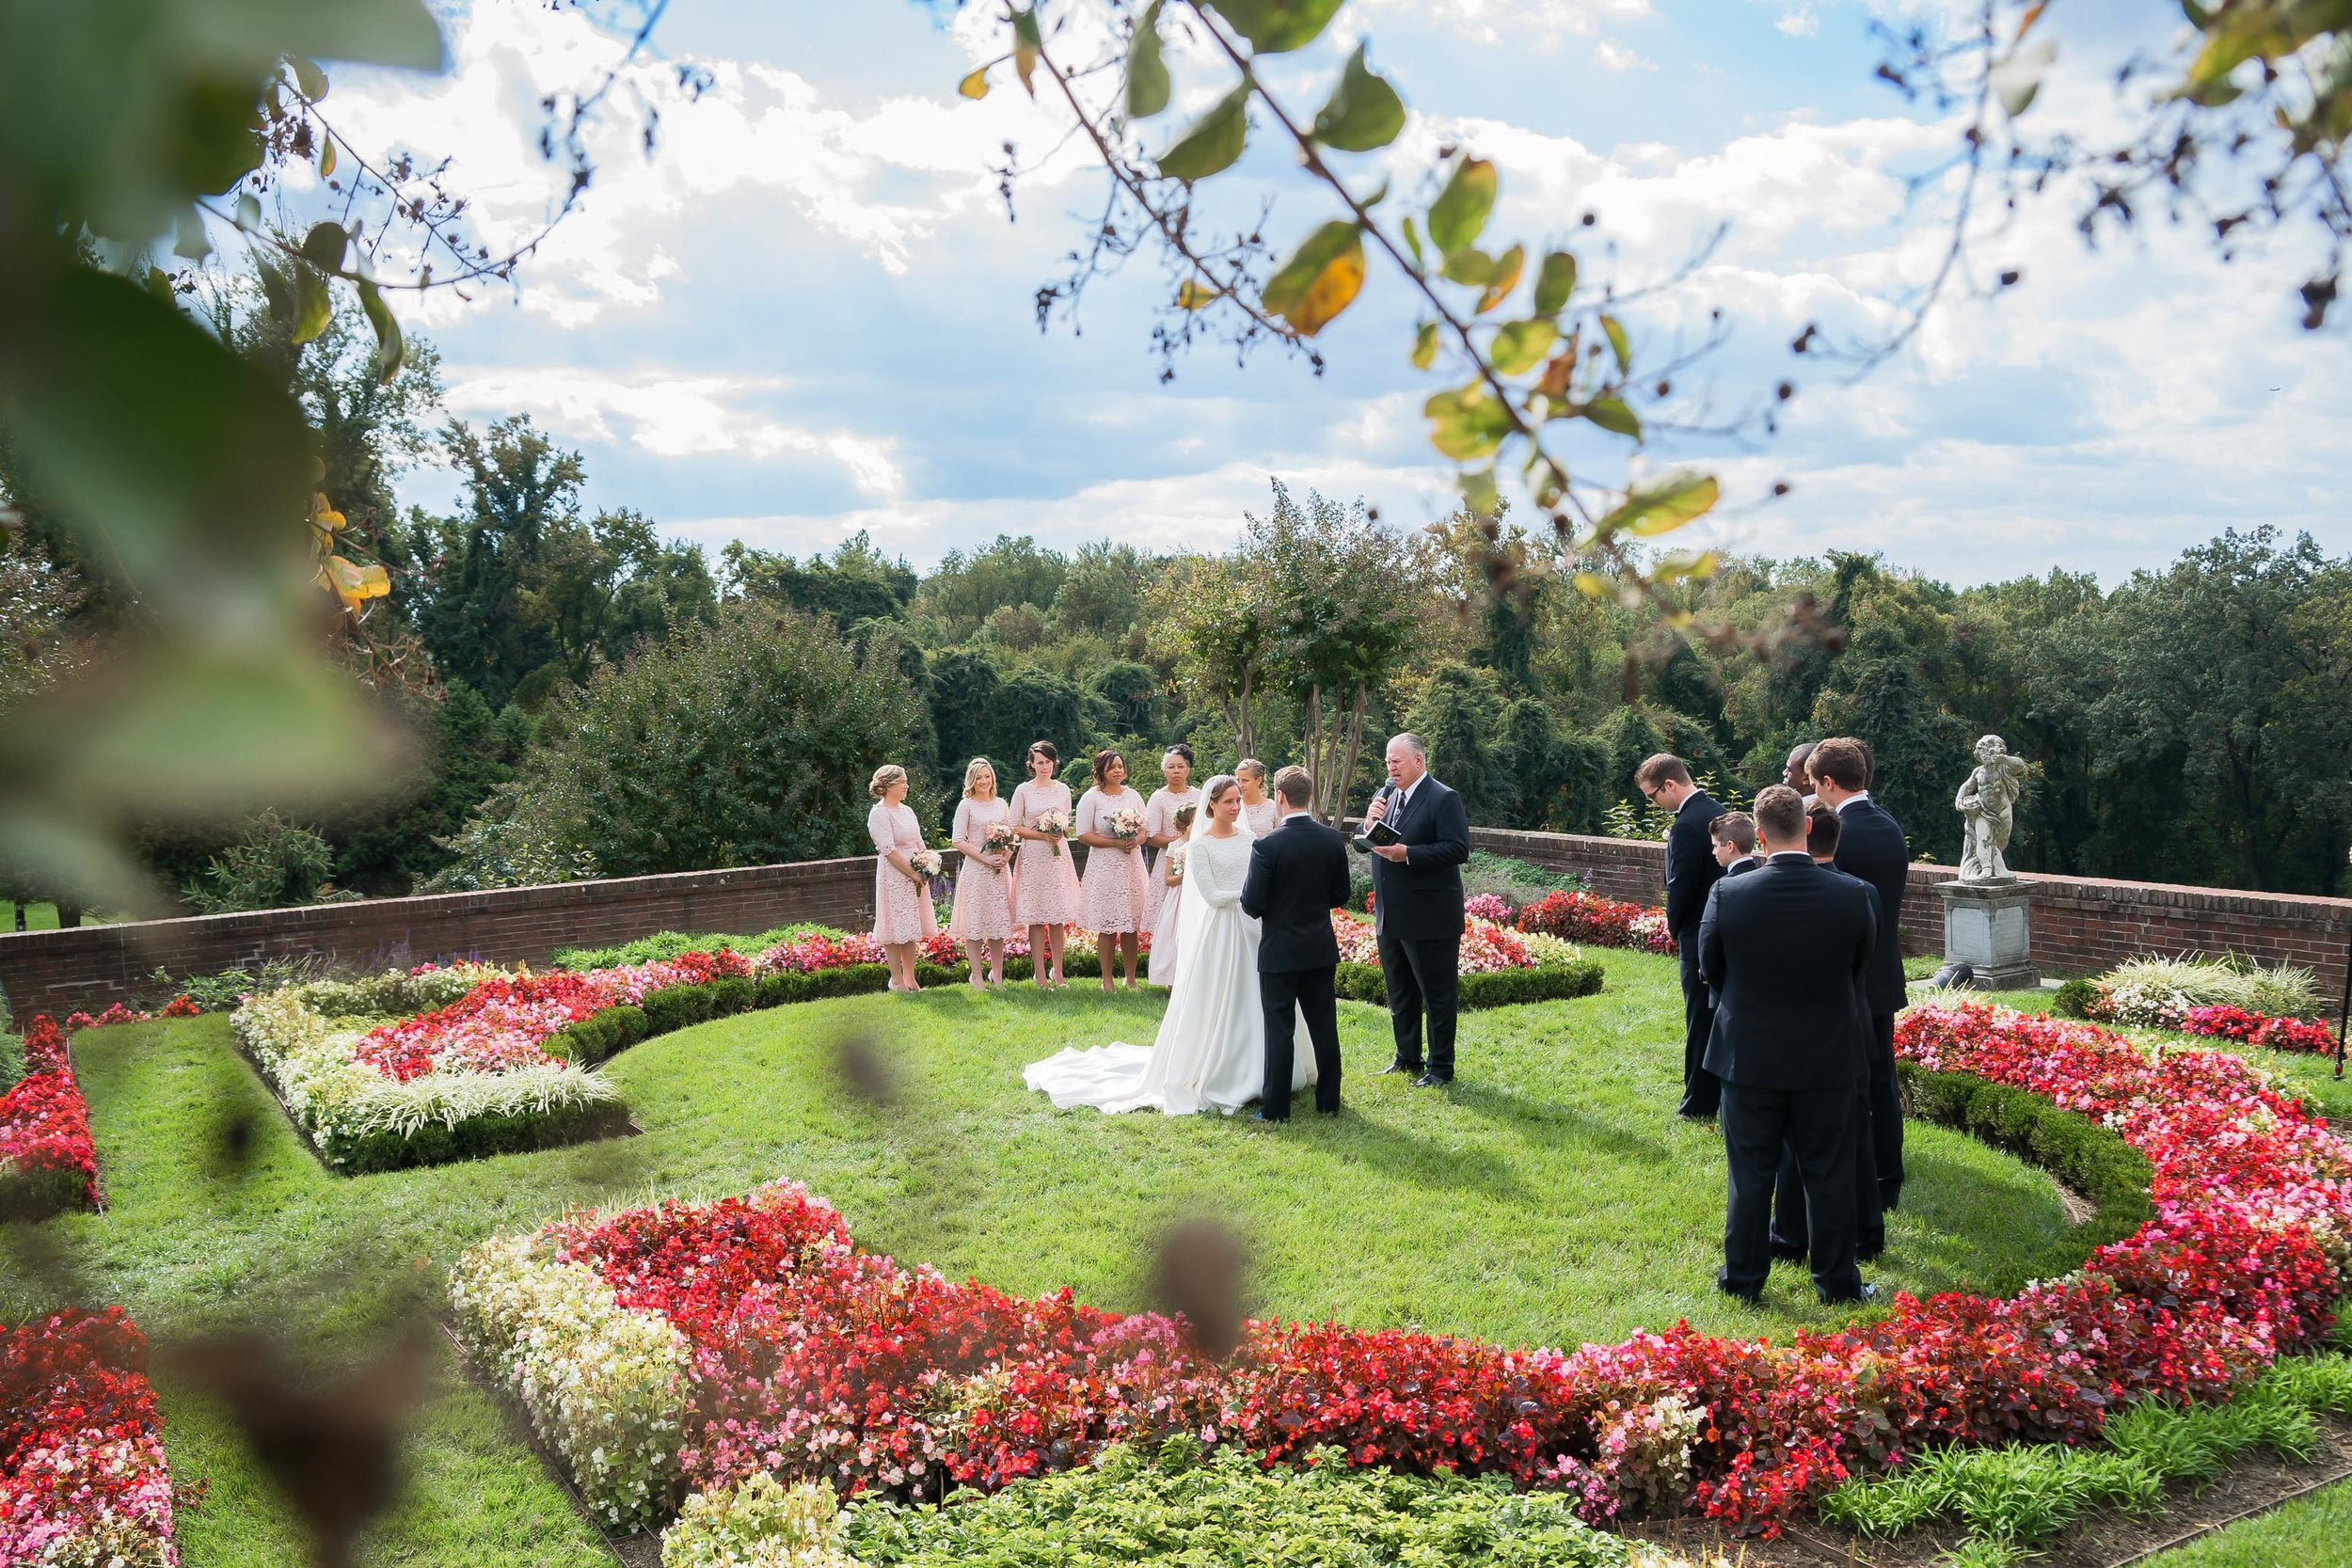 Outdoor garden wedding ceremony at Oxon Hill Manor 